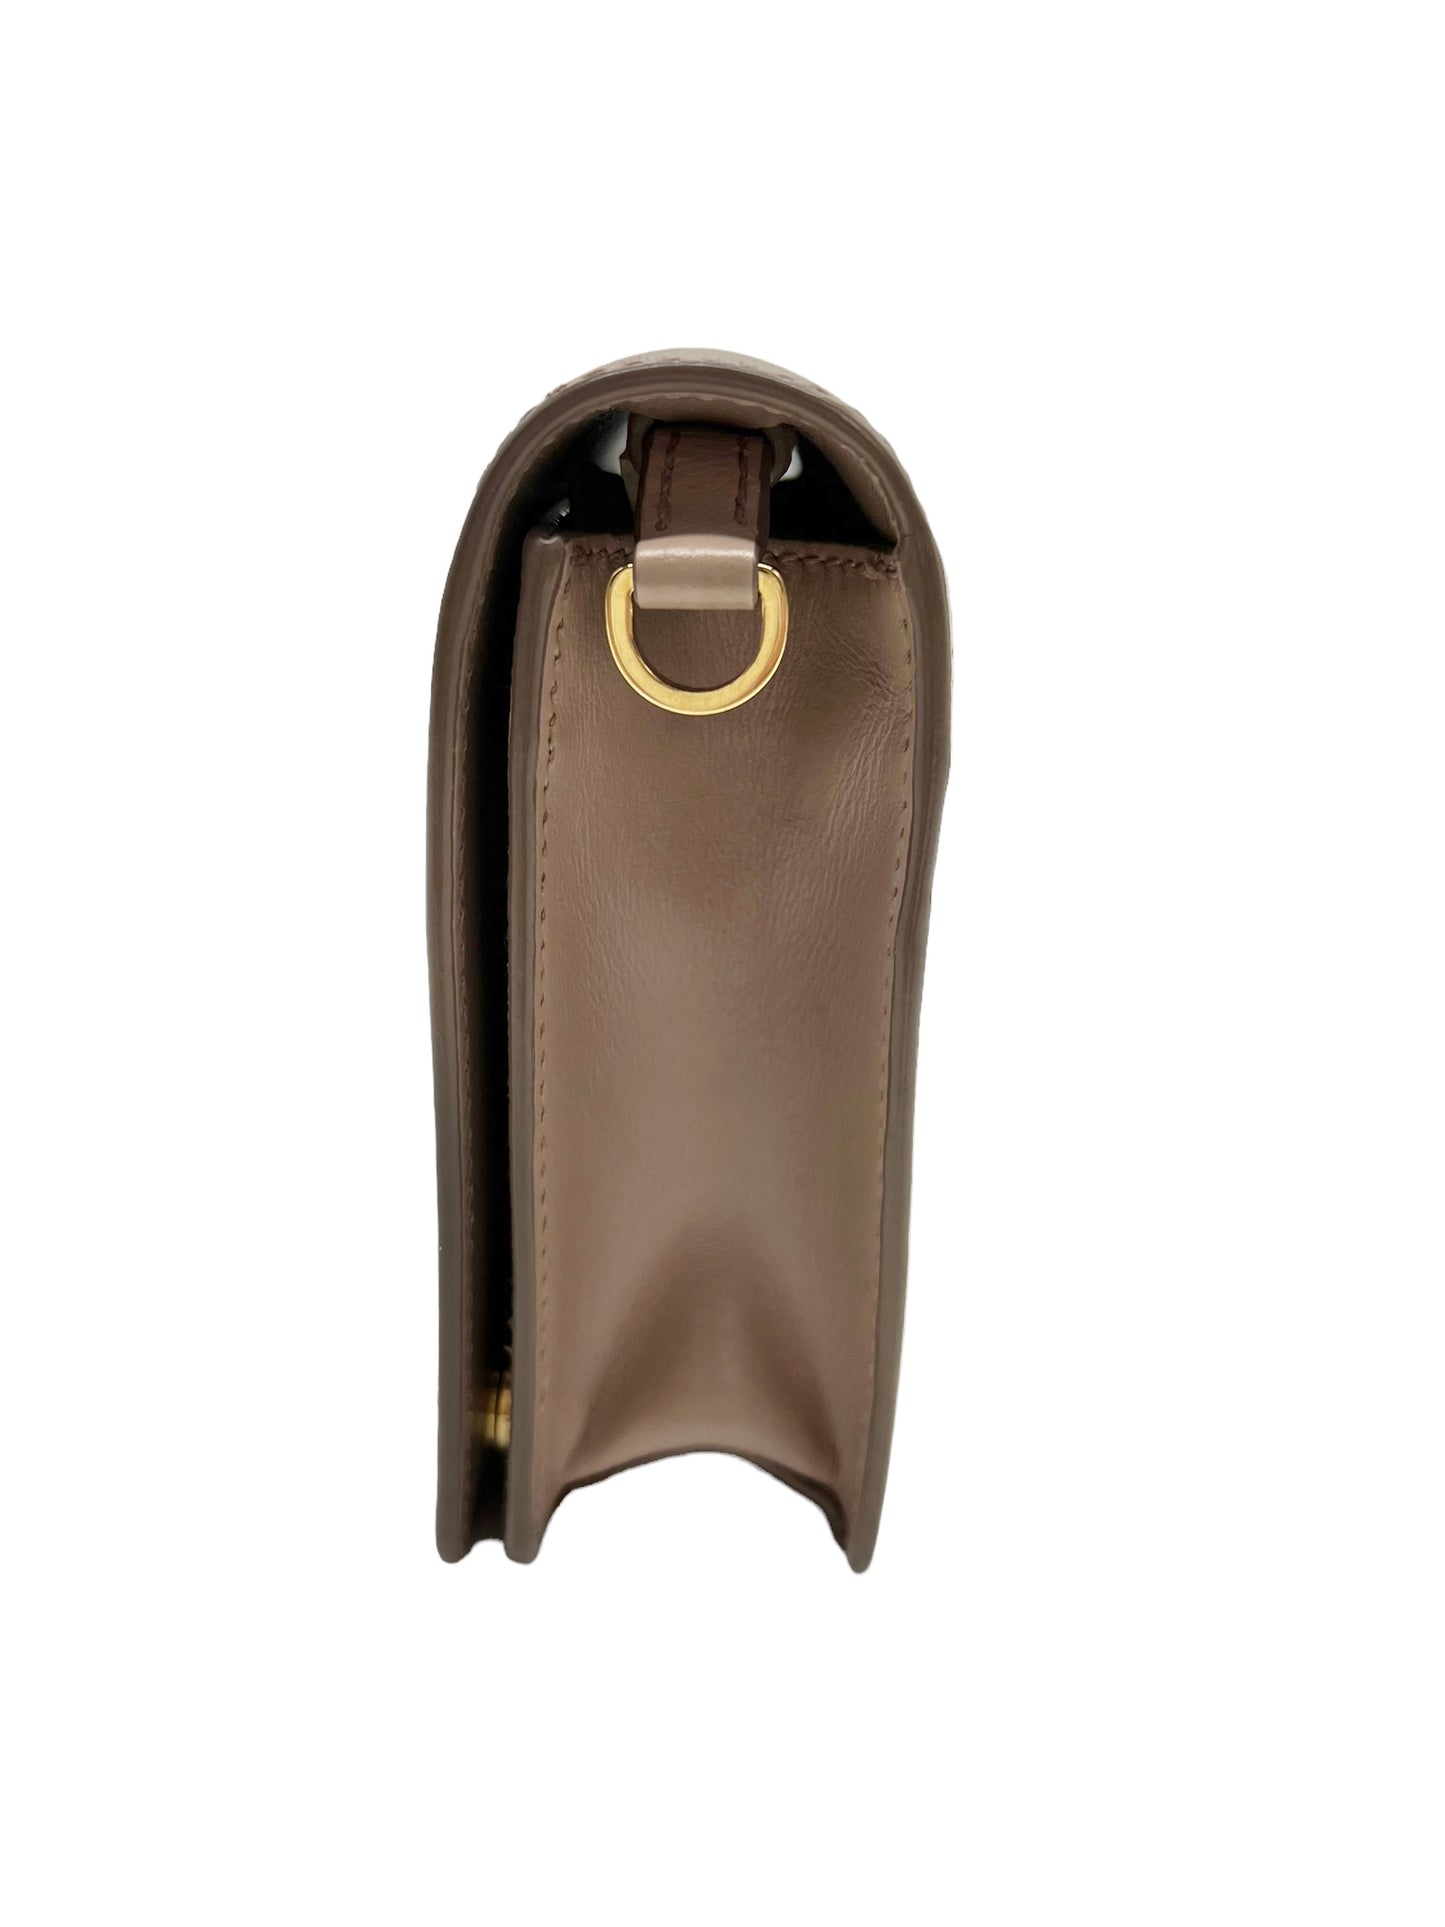 Prada Blush Saffiano Leather Chain Shoulder Bag